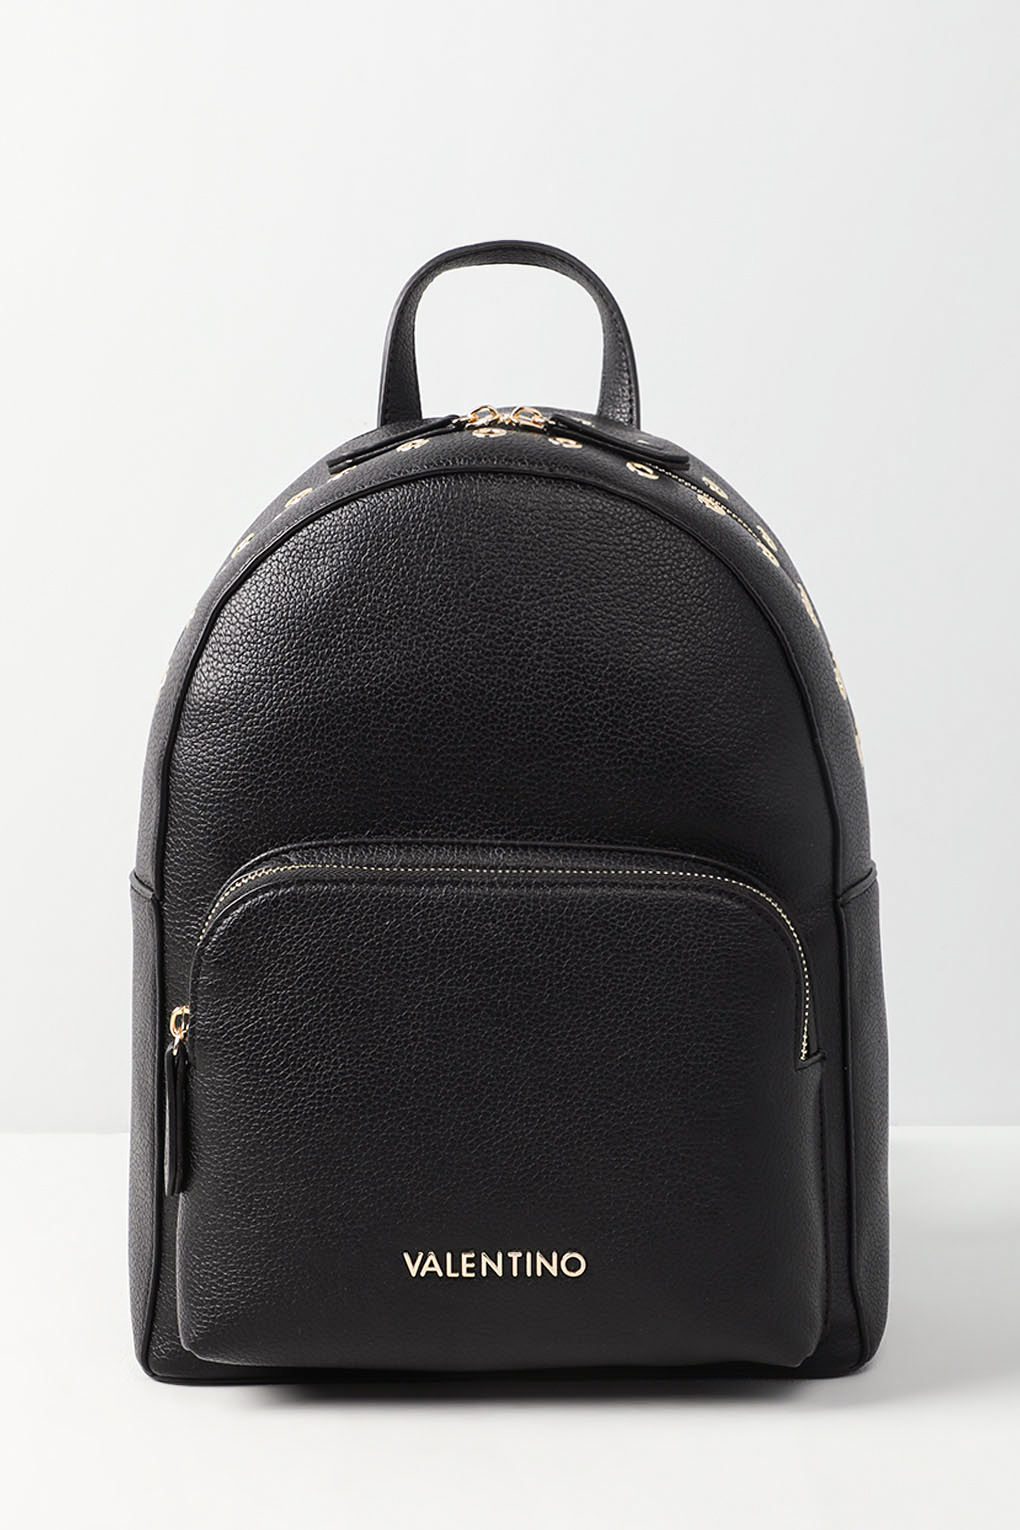 Рюкзак женский Valentino VBS7GM04 черный, 32,5x25x14 см